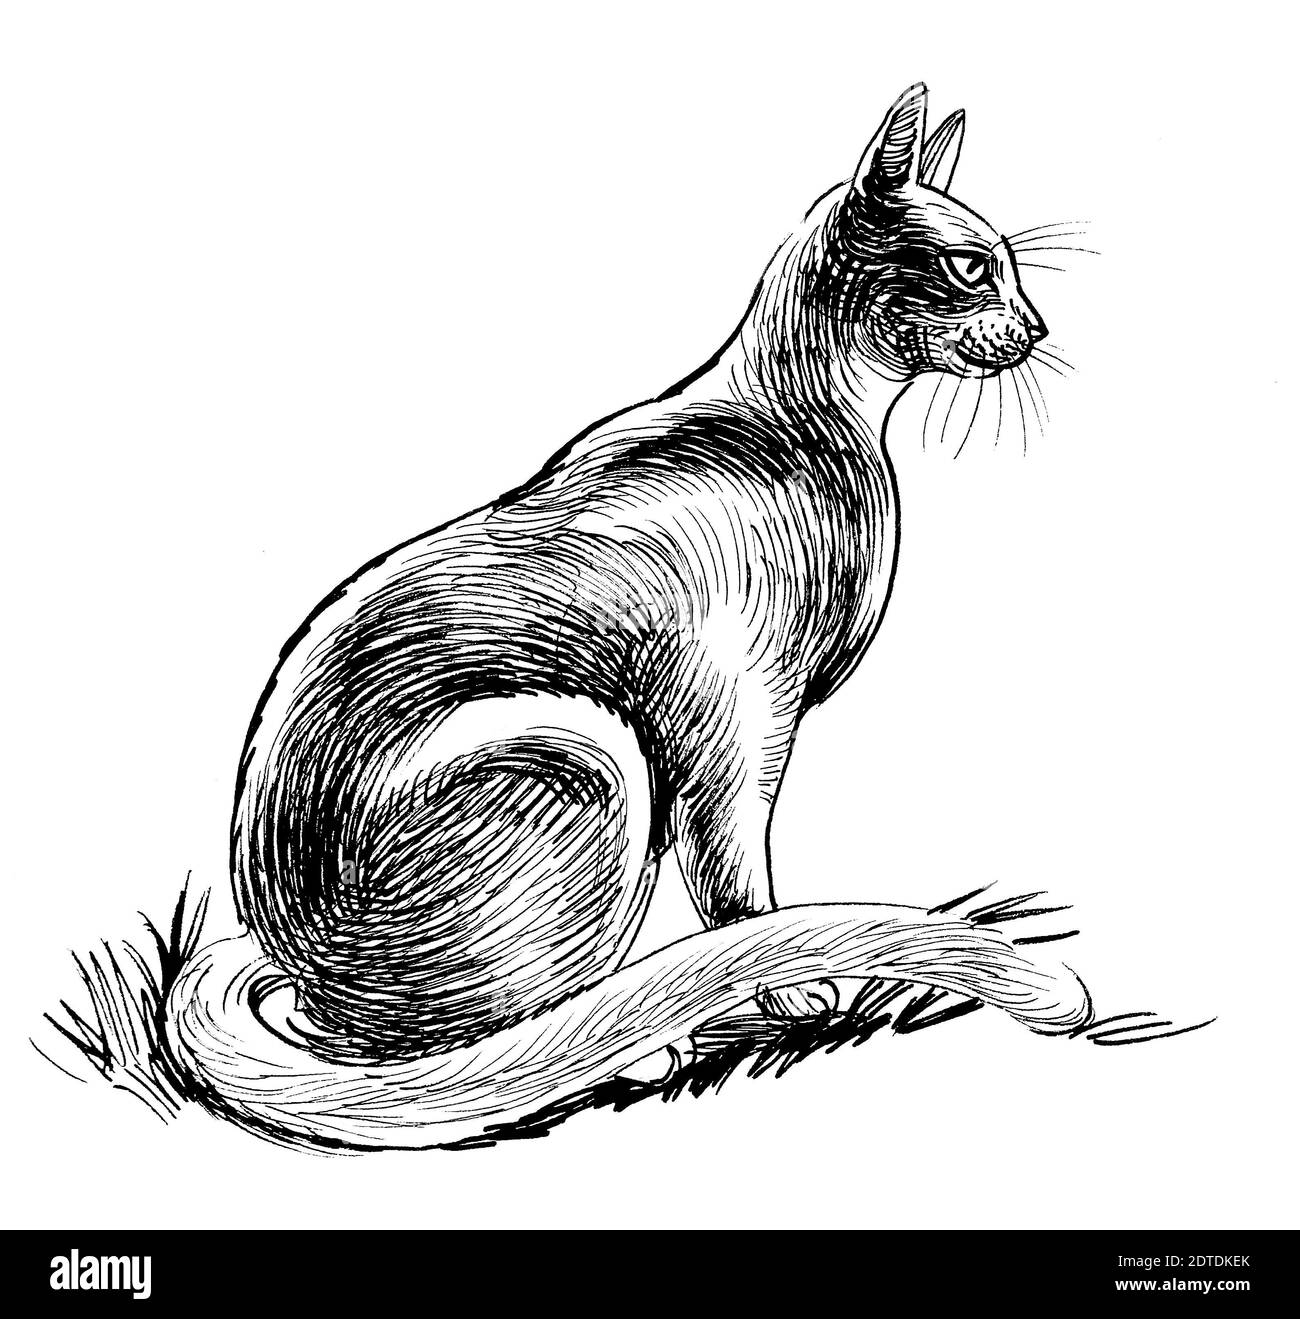 How to draw a cat  Lets get started  koooooooooooooooo  Cat drawing  tutorial Animal drawings Drawings